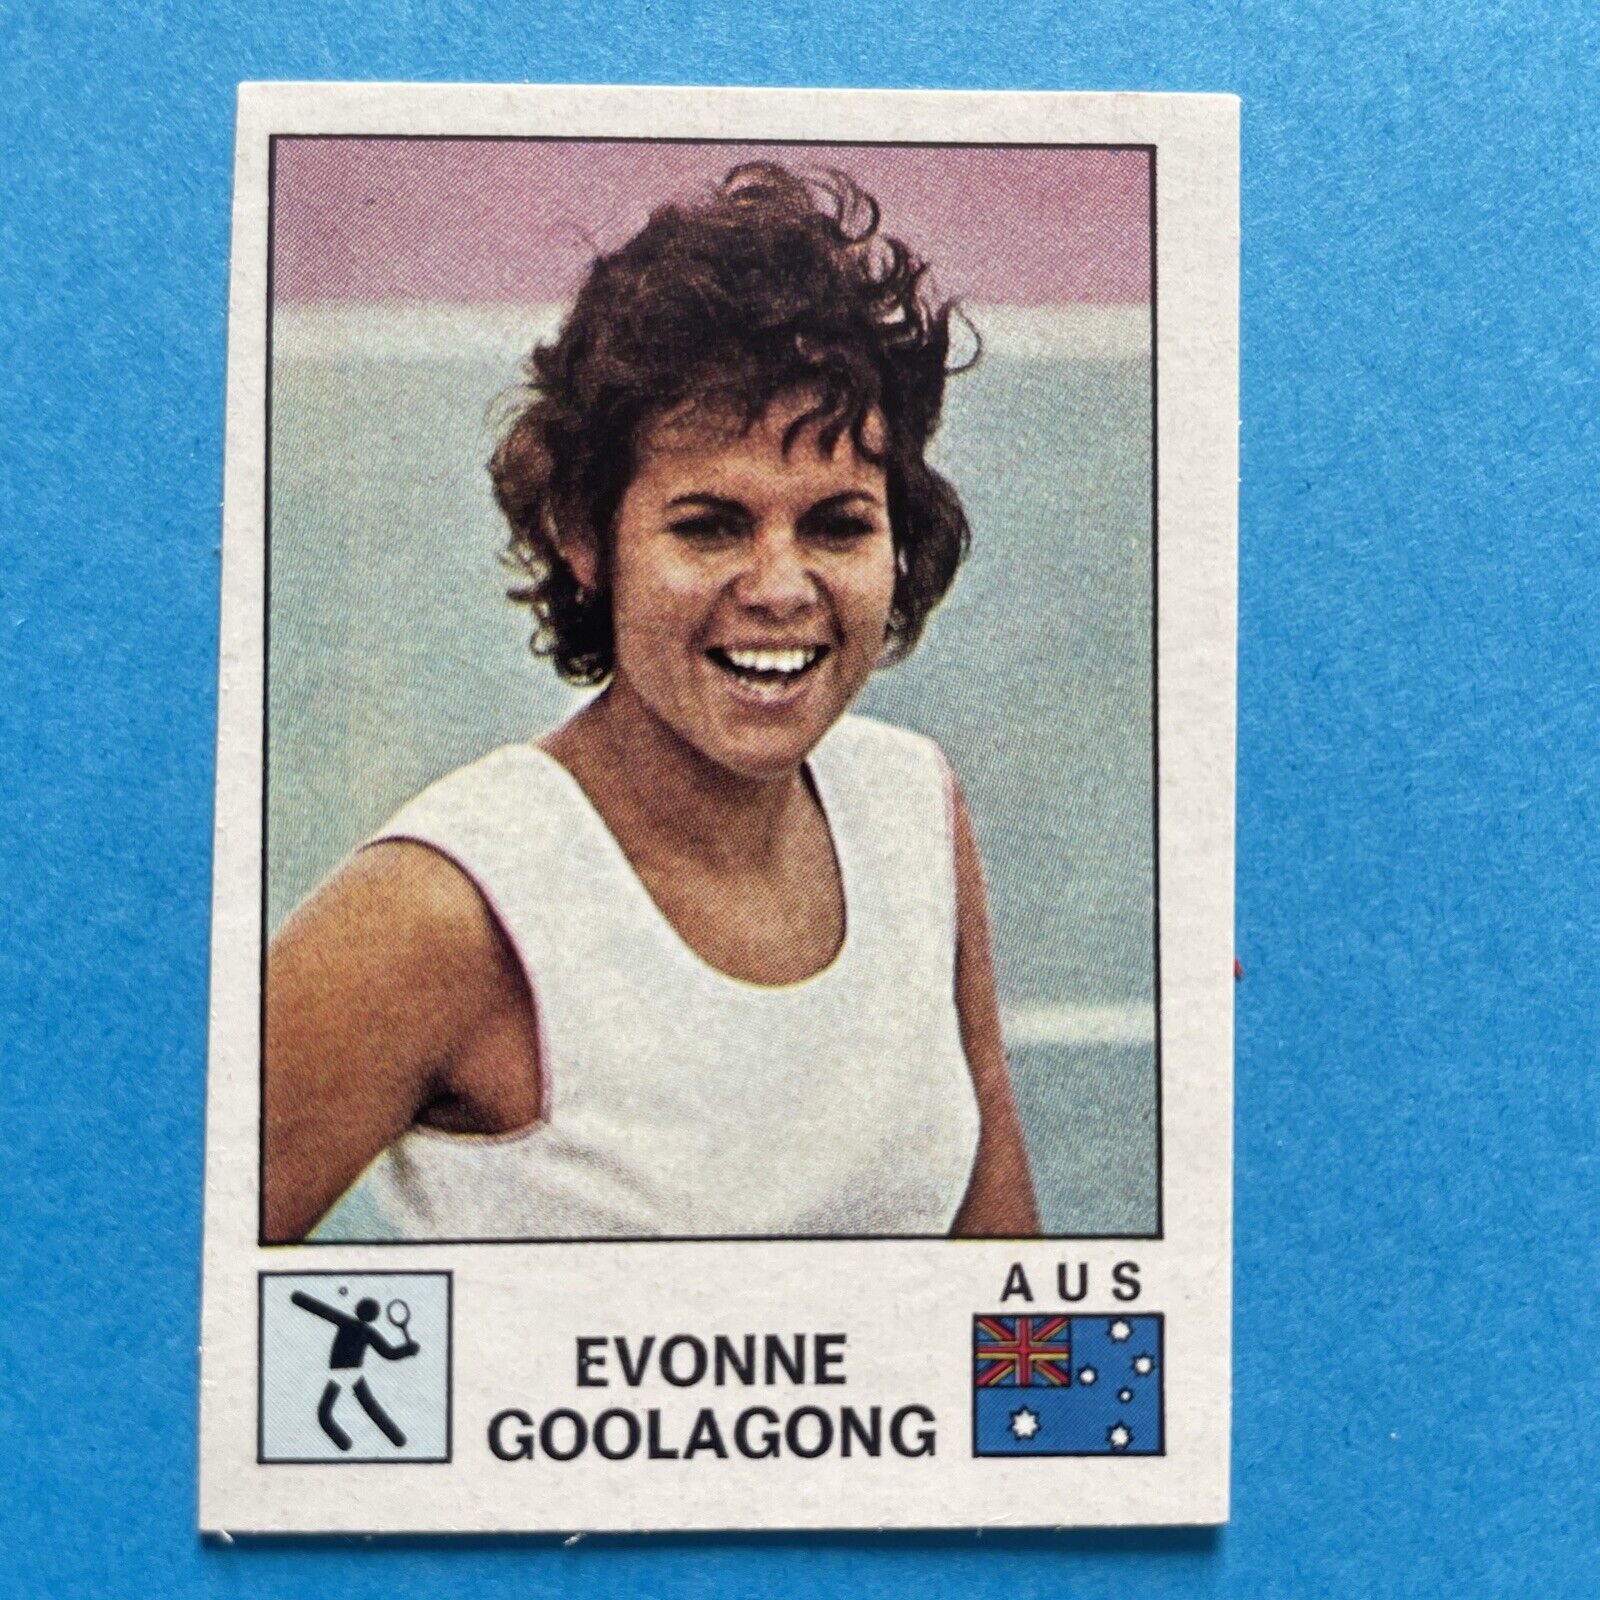 Original 1974 image sticker Panini sport stars tennis evonne goolagong